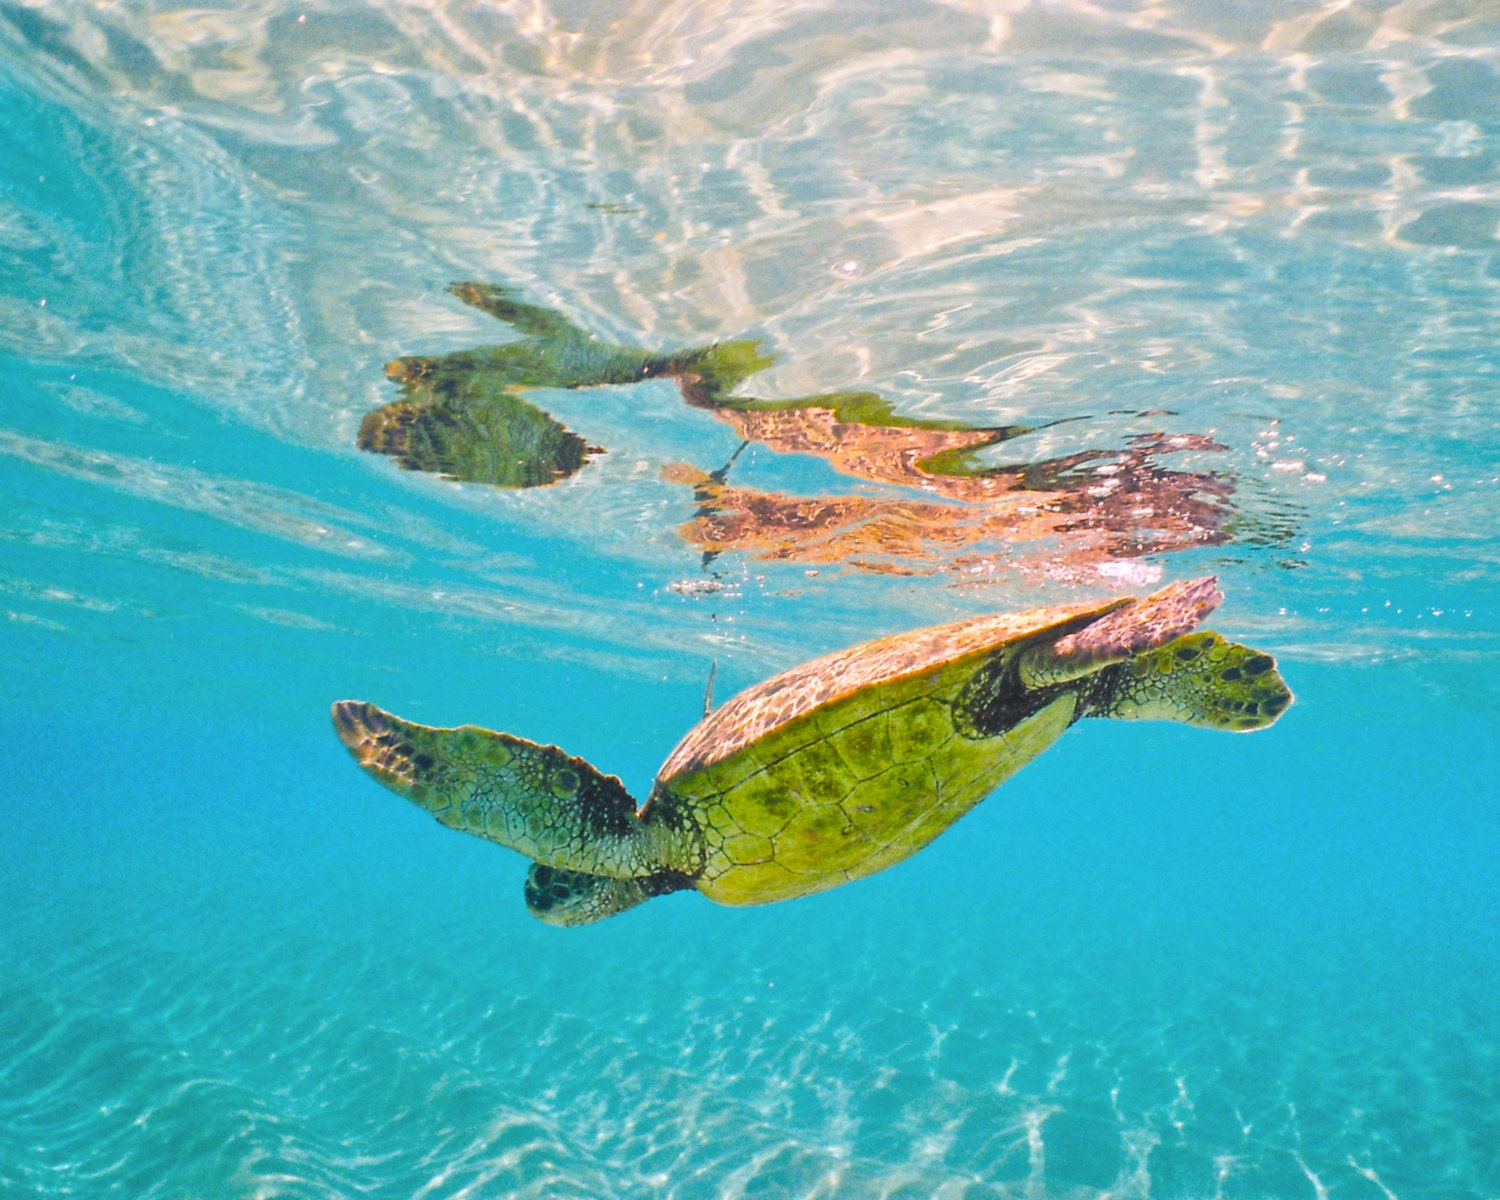 Underwater Honu Dive PhotoGreen Sea Turtle PhotographyHonu